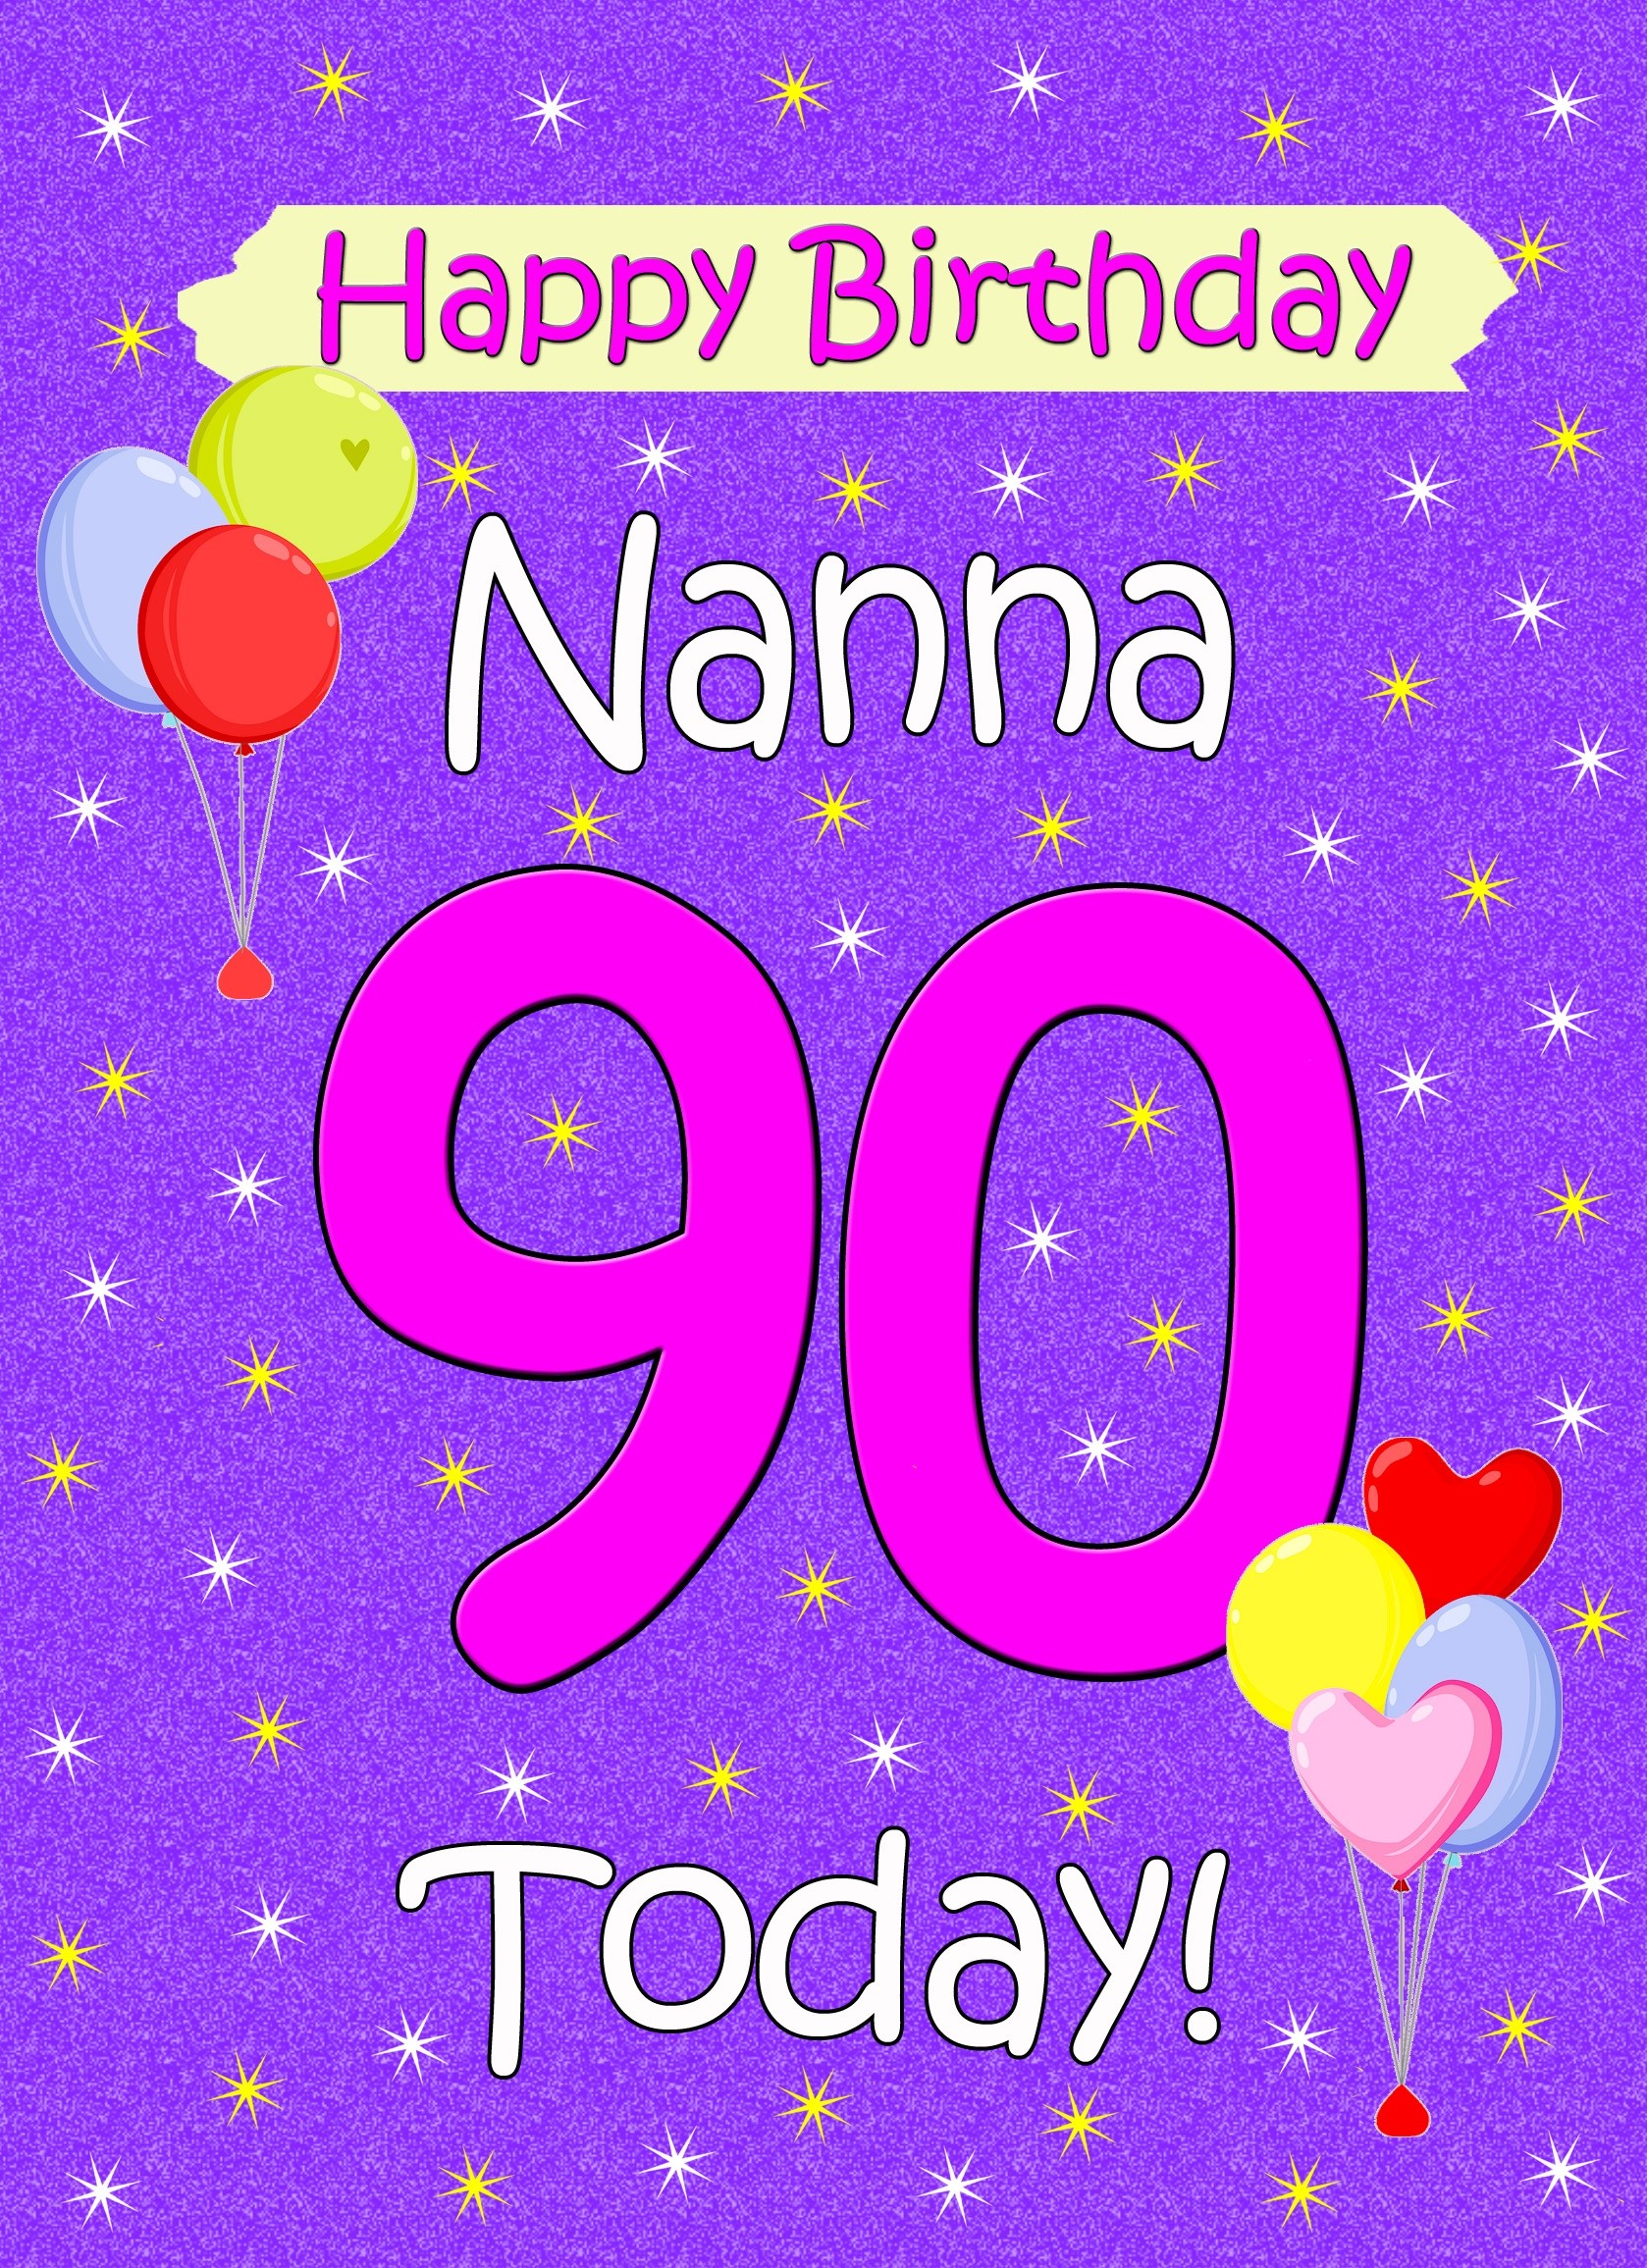 Nanna 90th Birthday Card (Lilac)